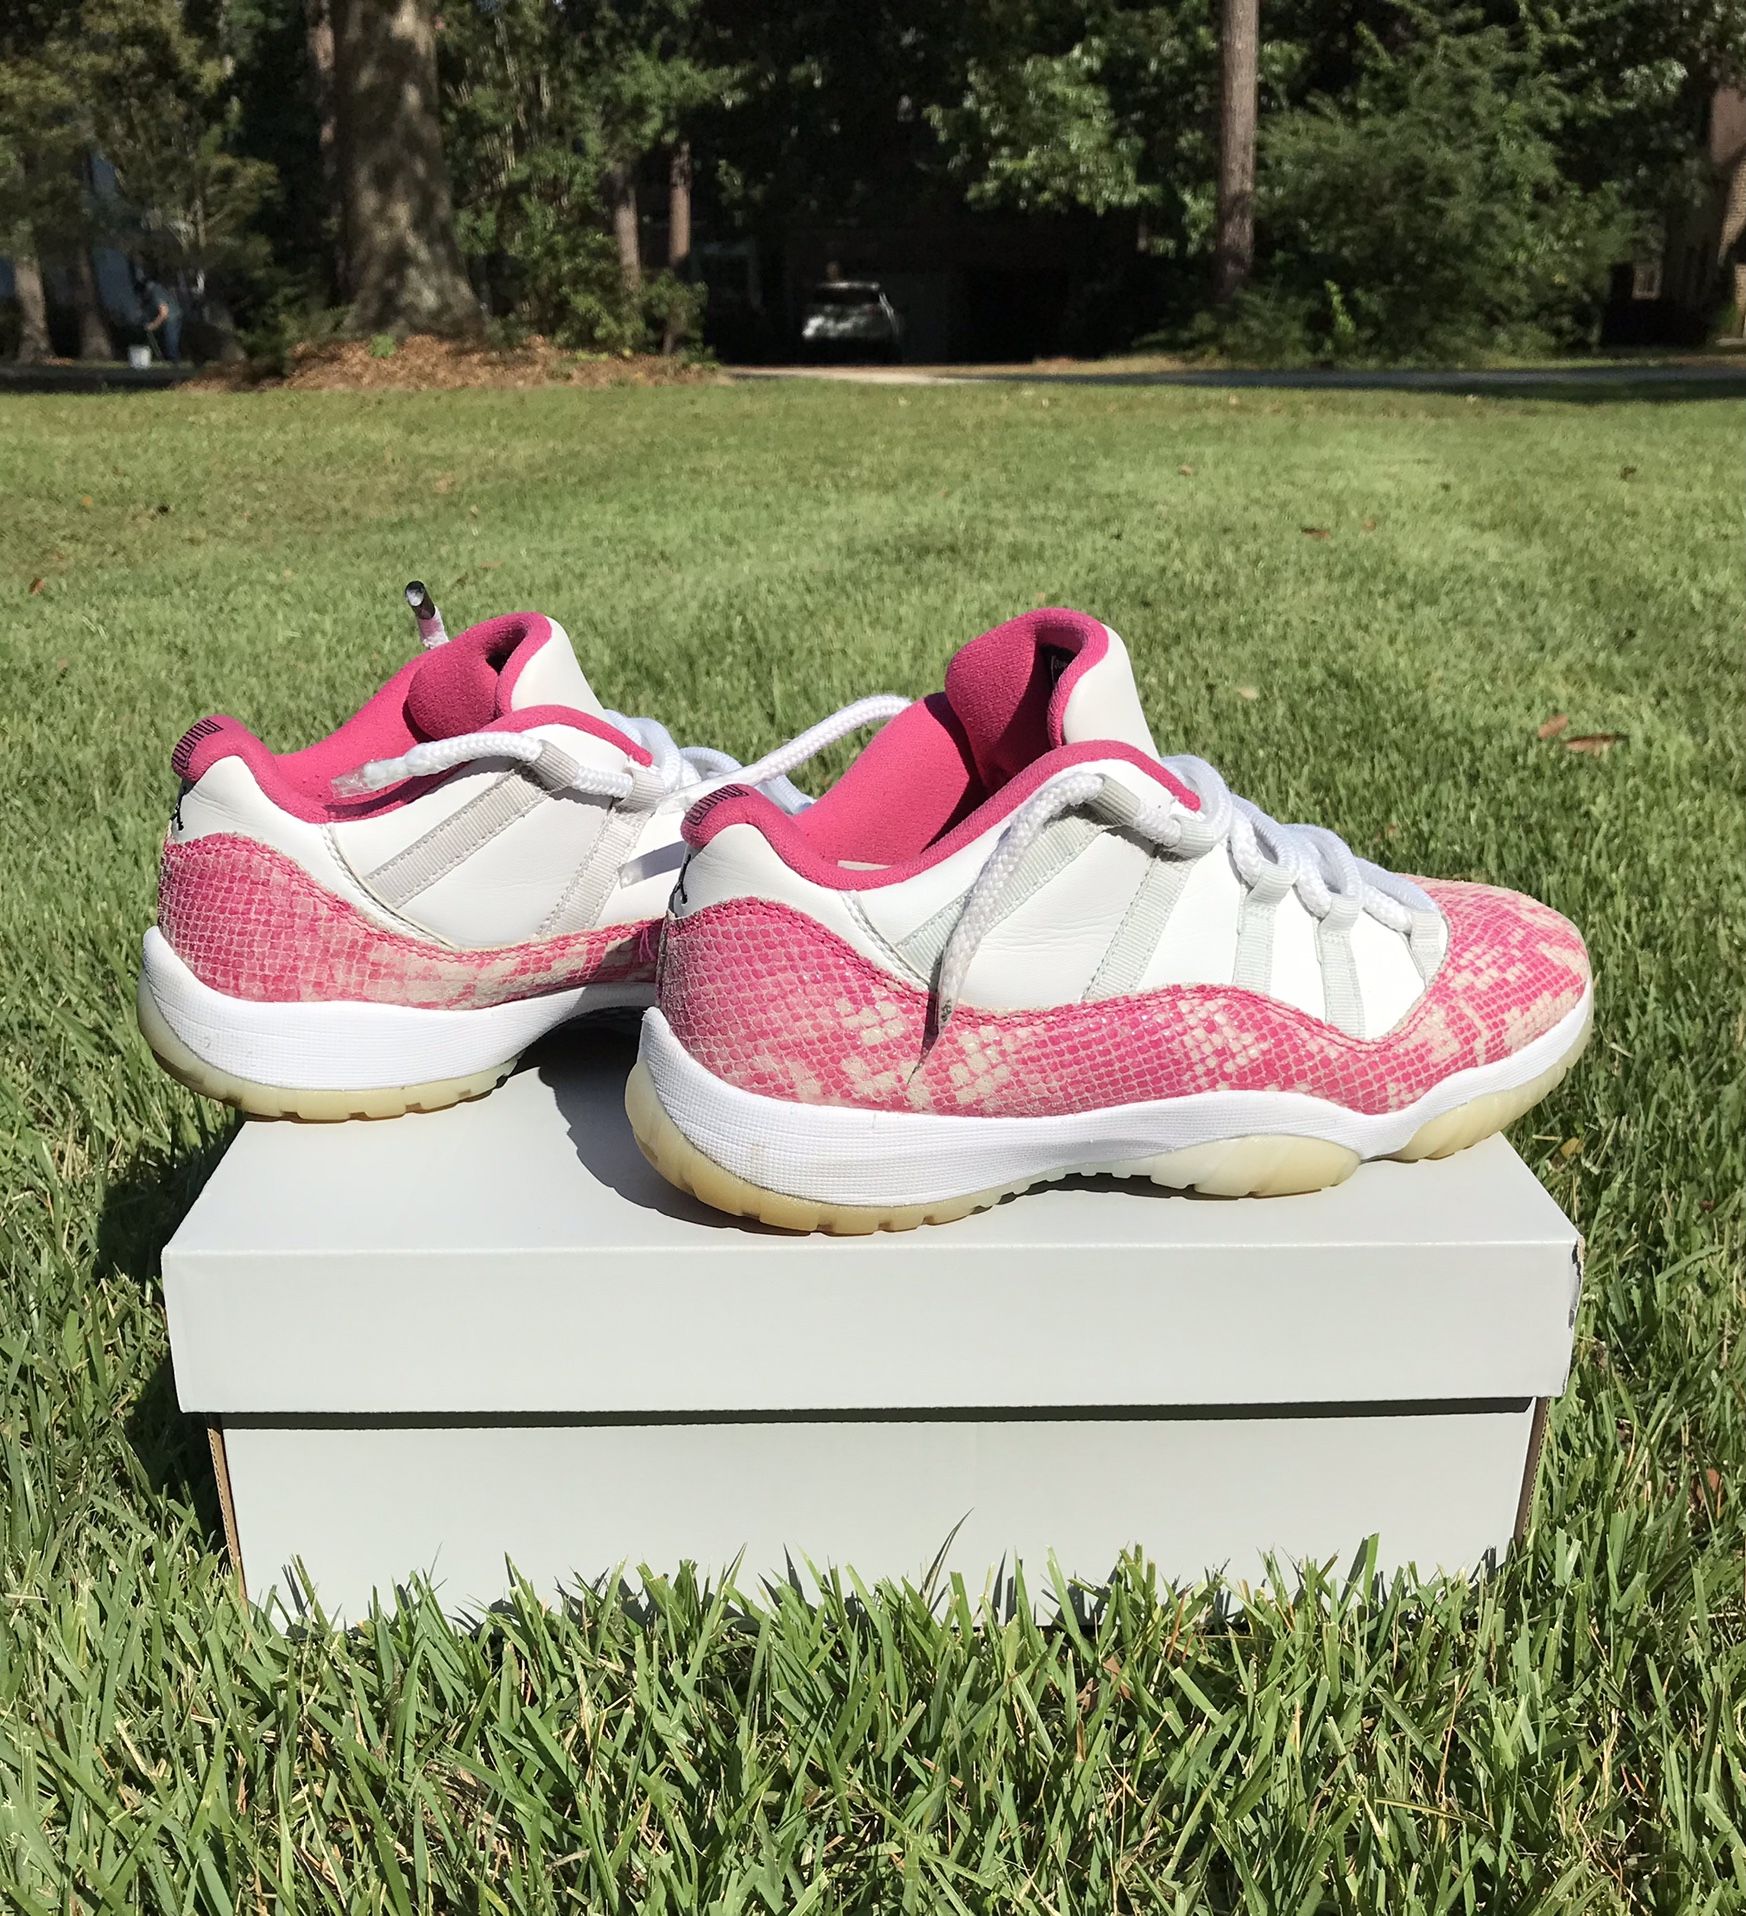 Nike Air Jordan 11 Retro Pink Snakeskin Women’s 